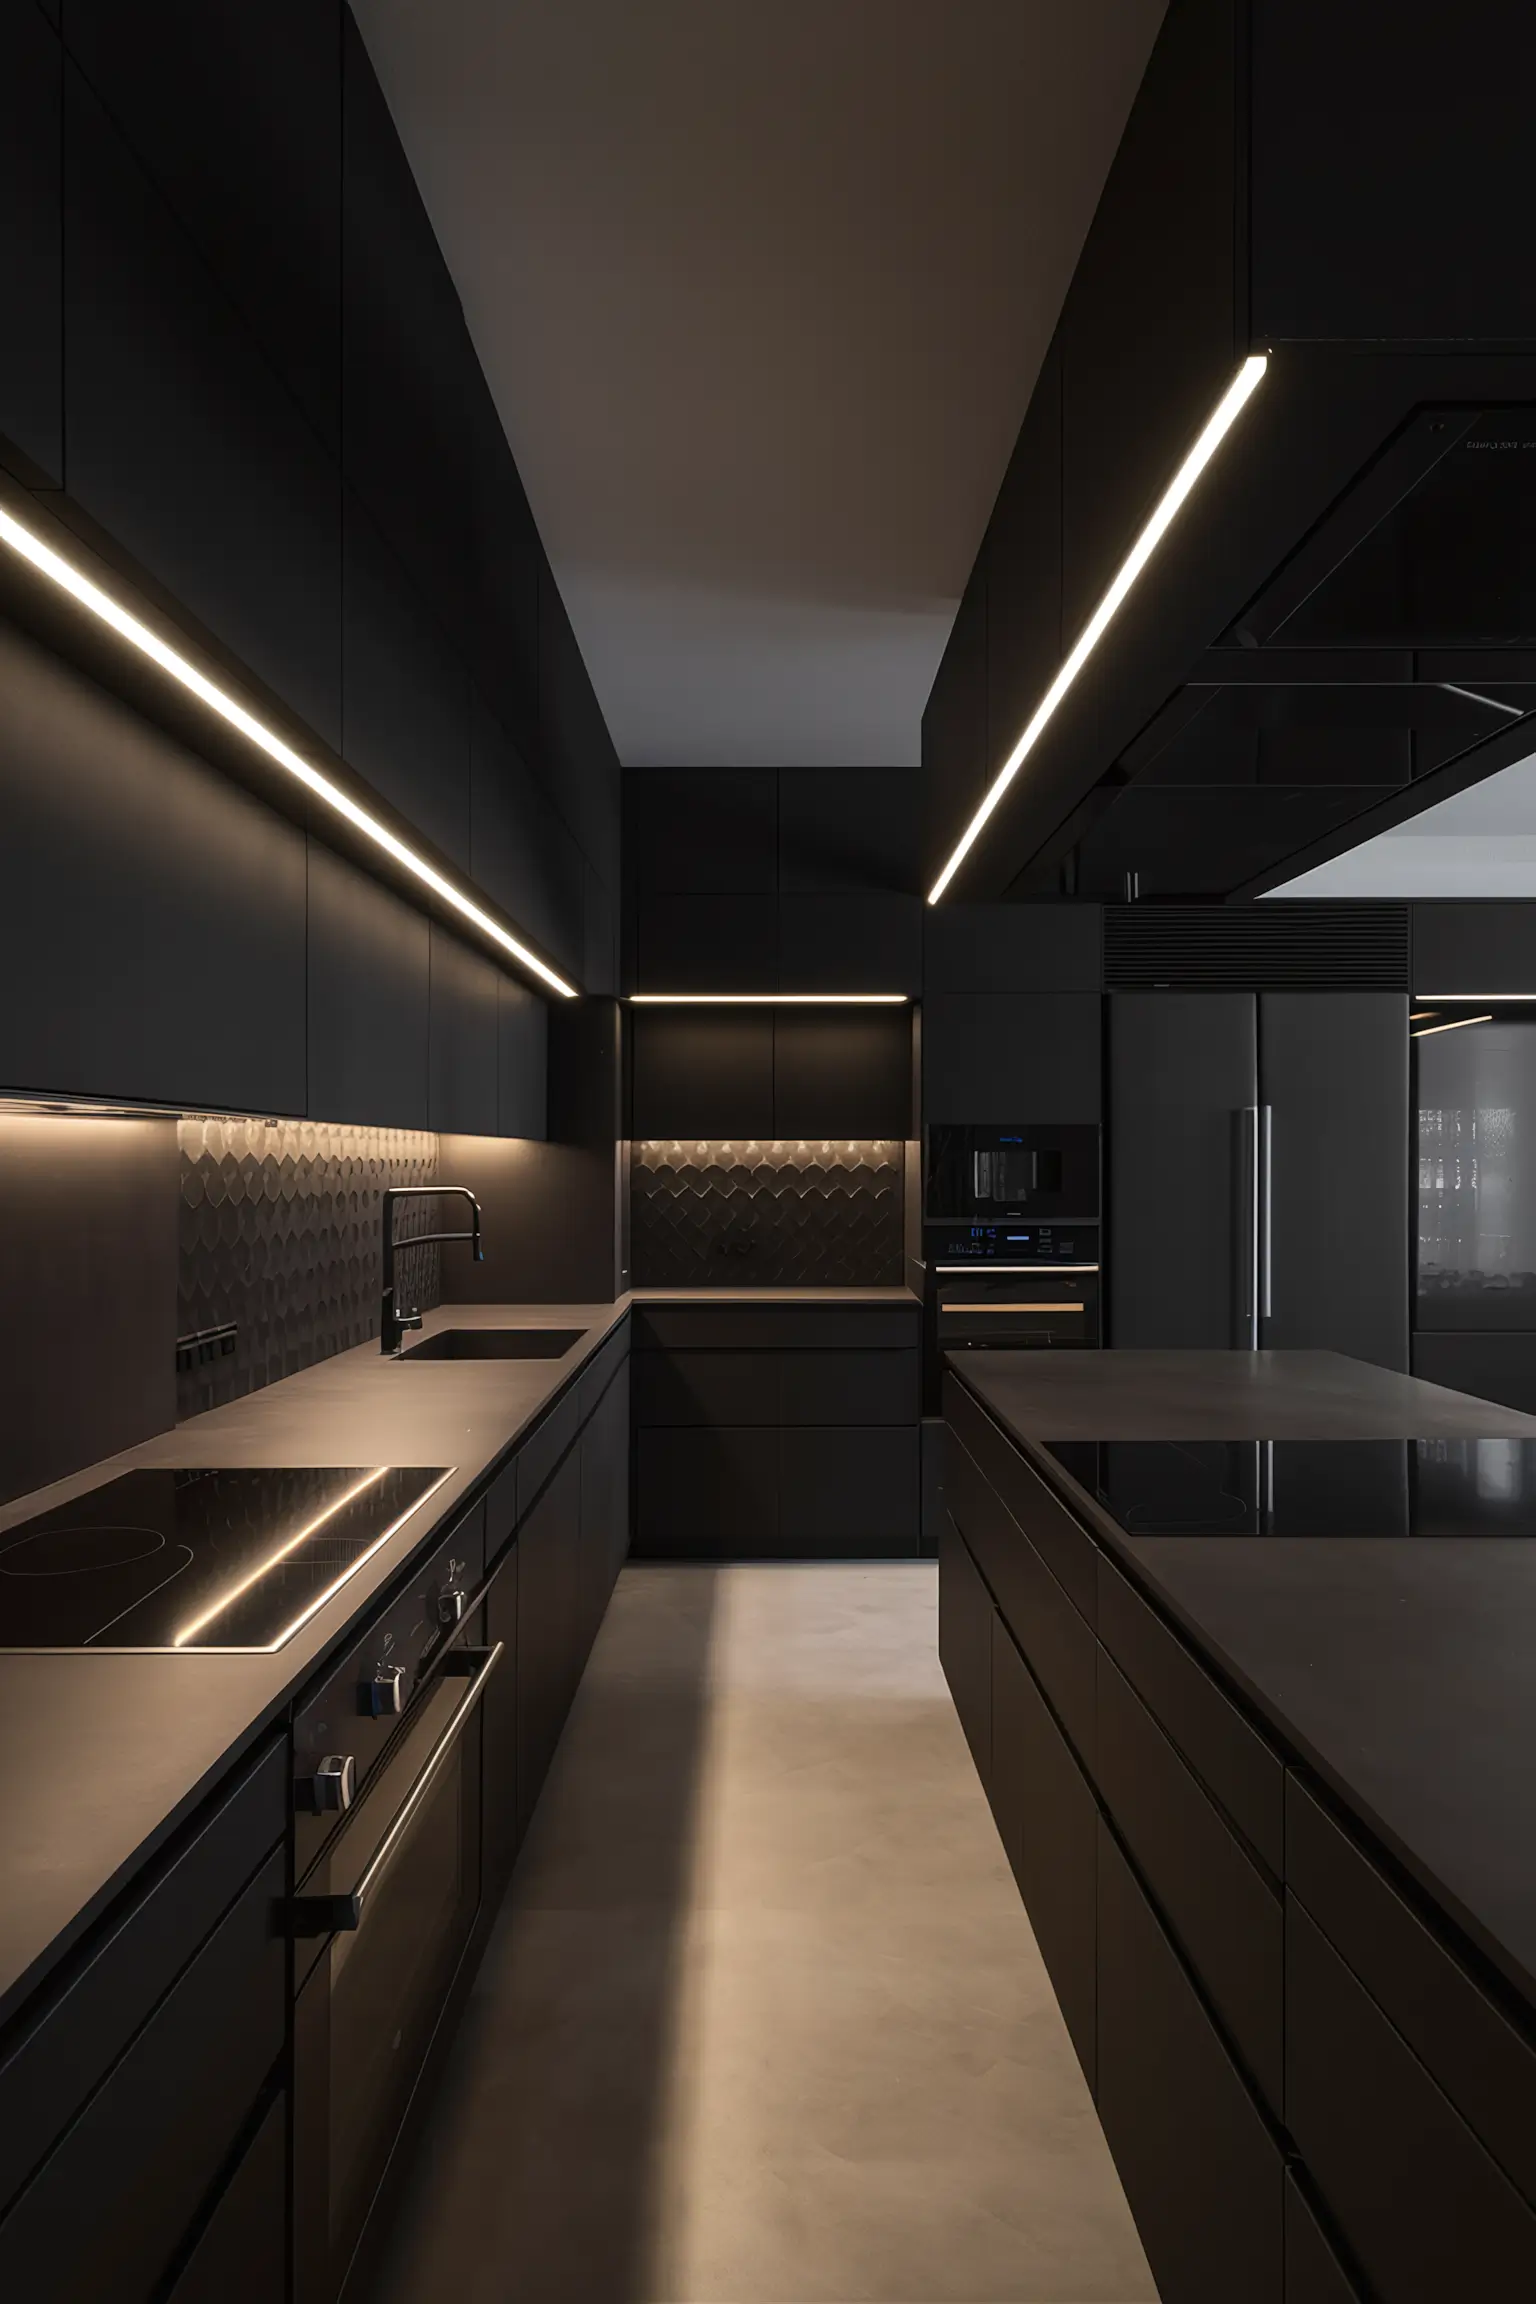 Modern black kitchen with minimalist design elements and high-tech appliances.